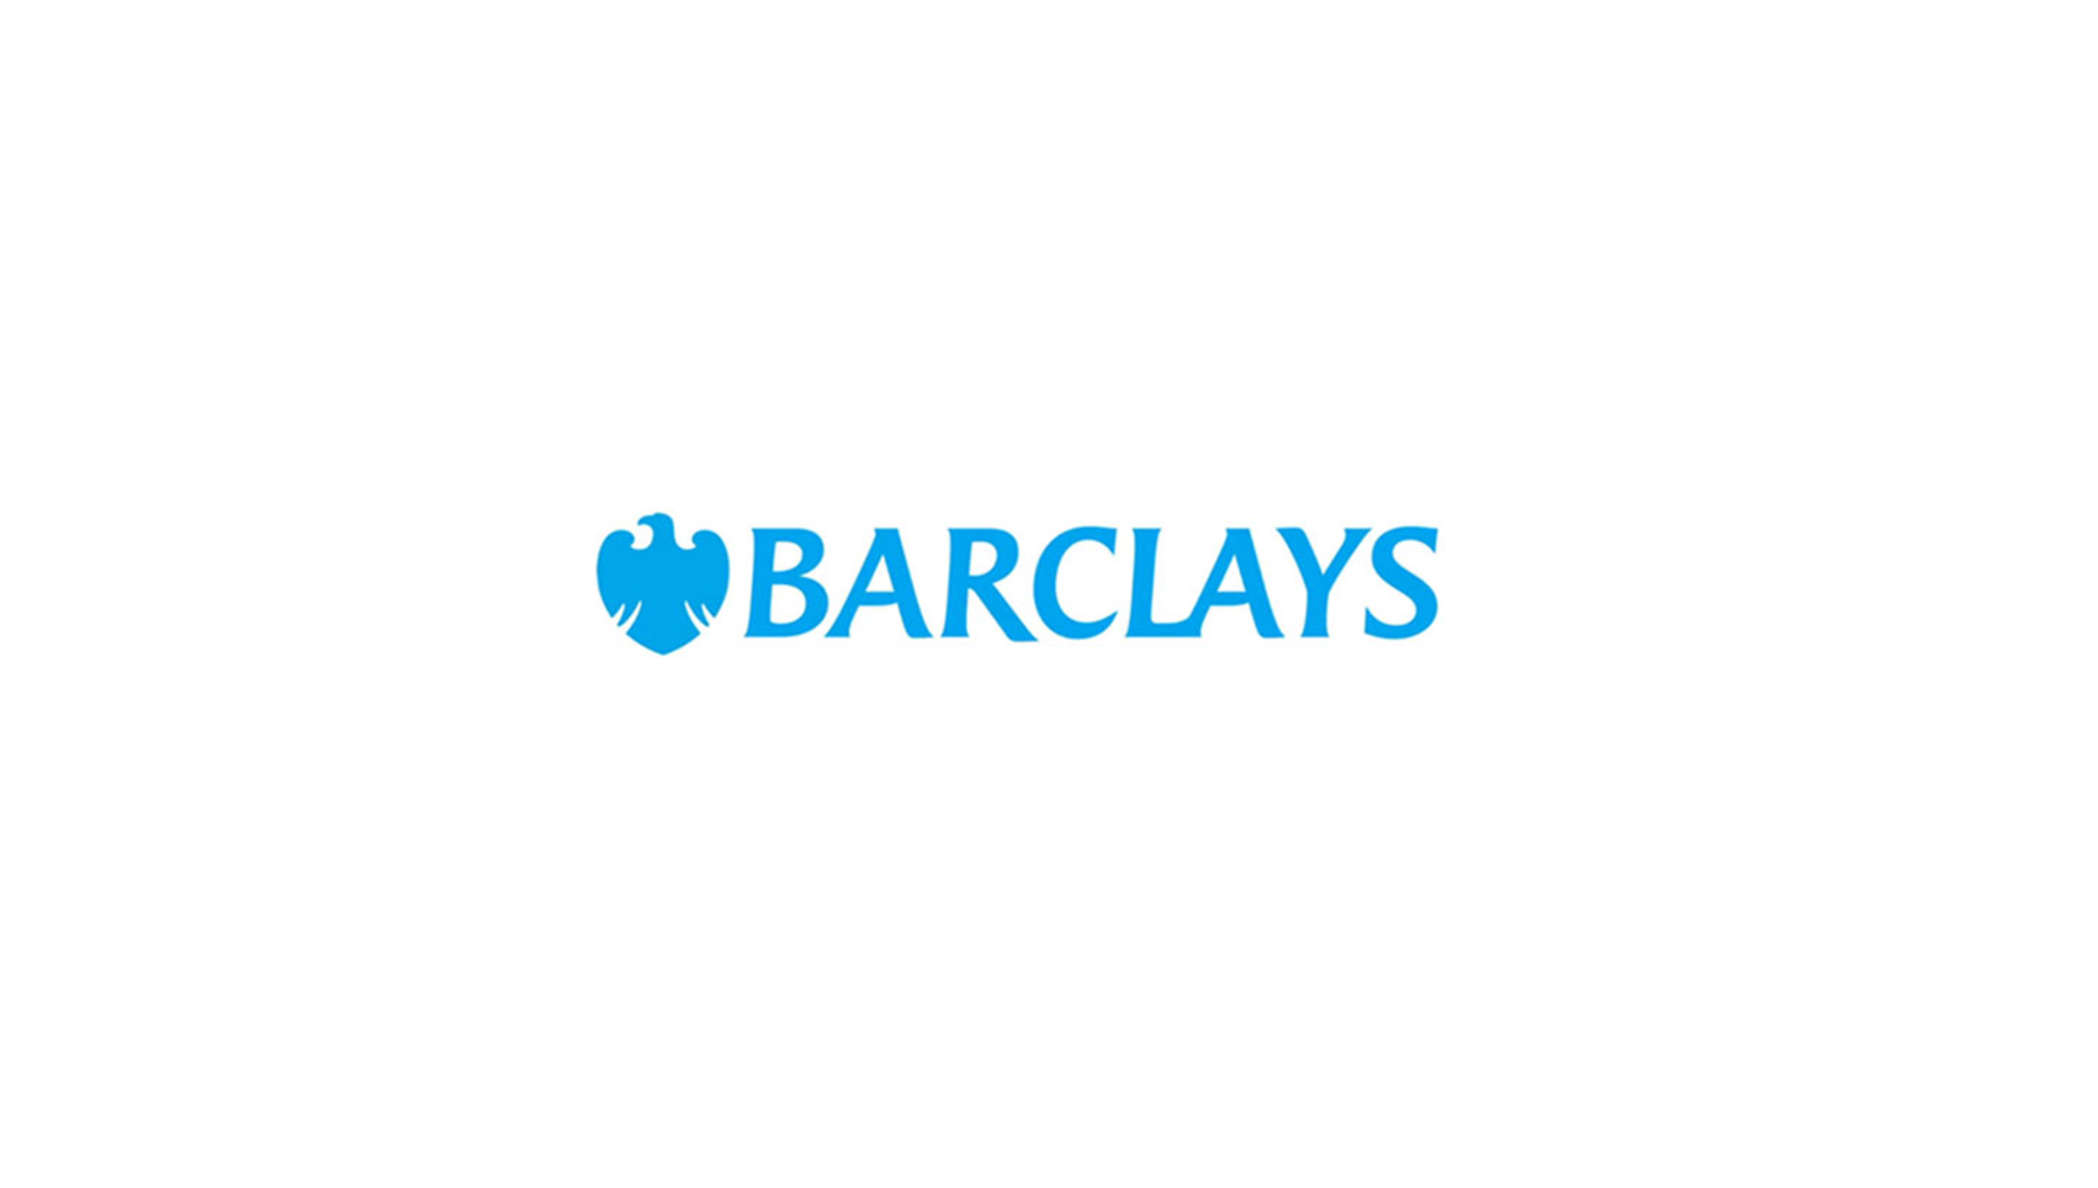 Barclays banking